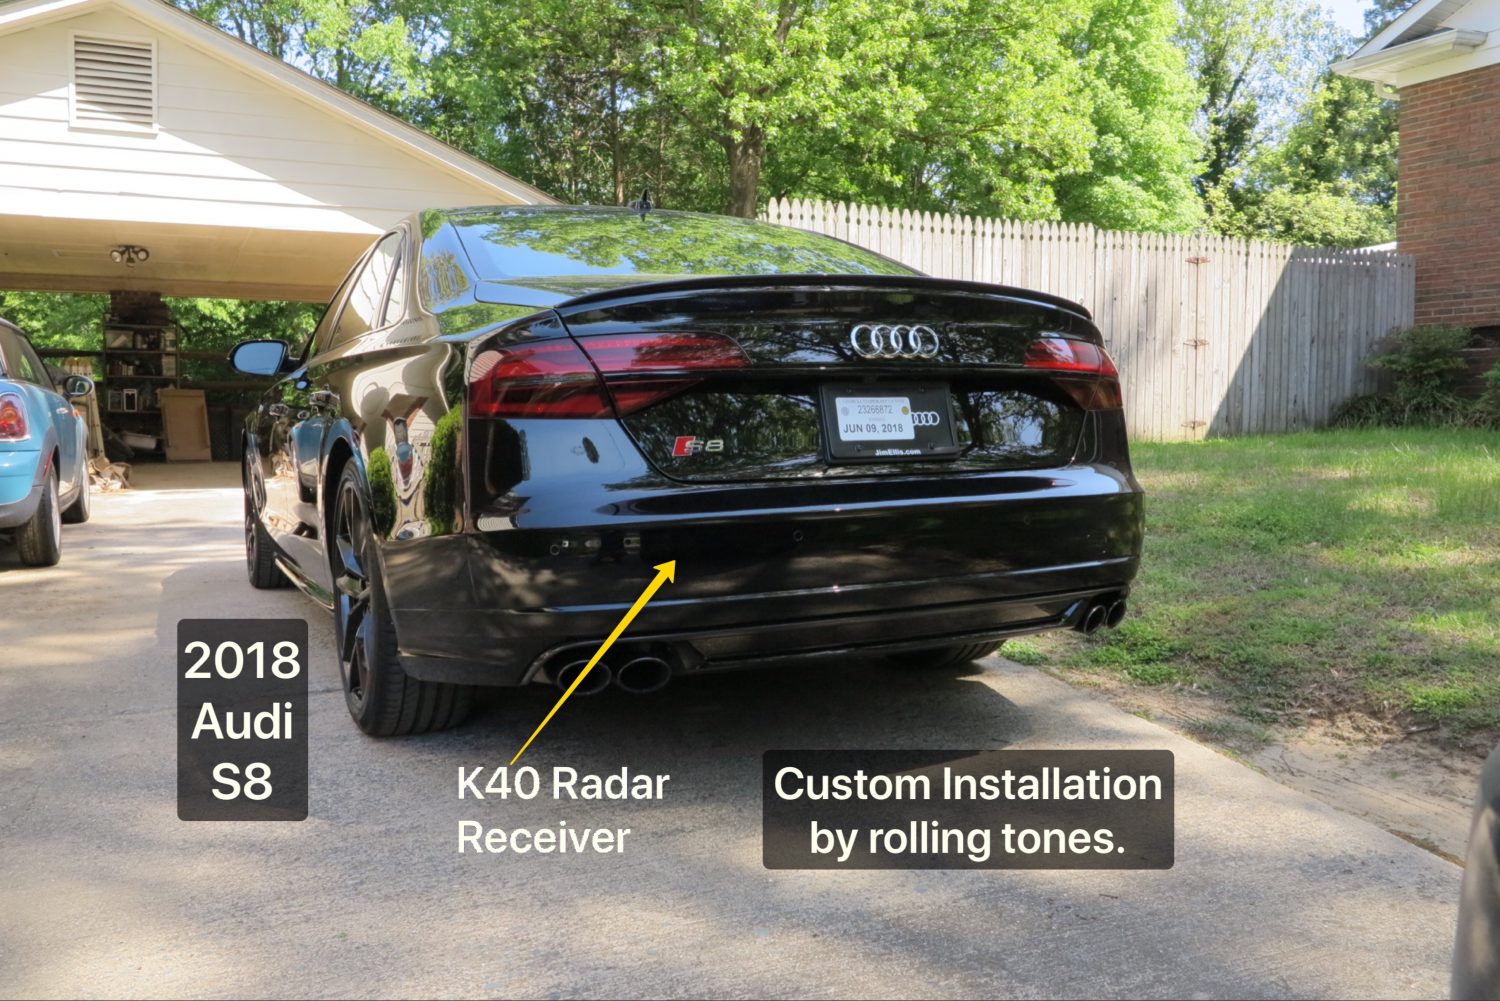 K40 Best Radar Detector on an Audi S8